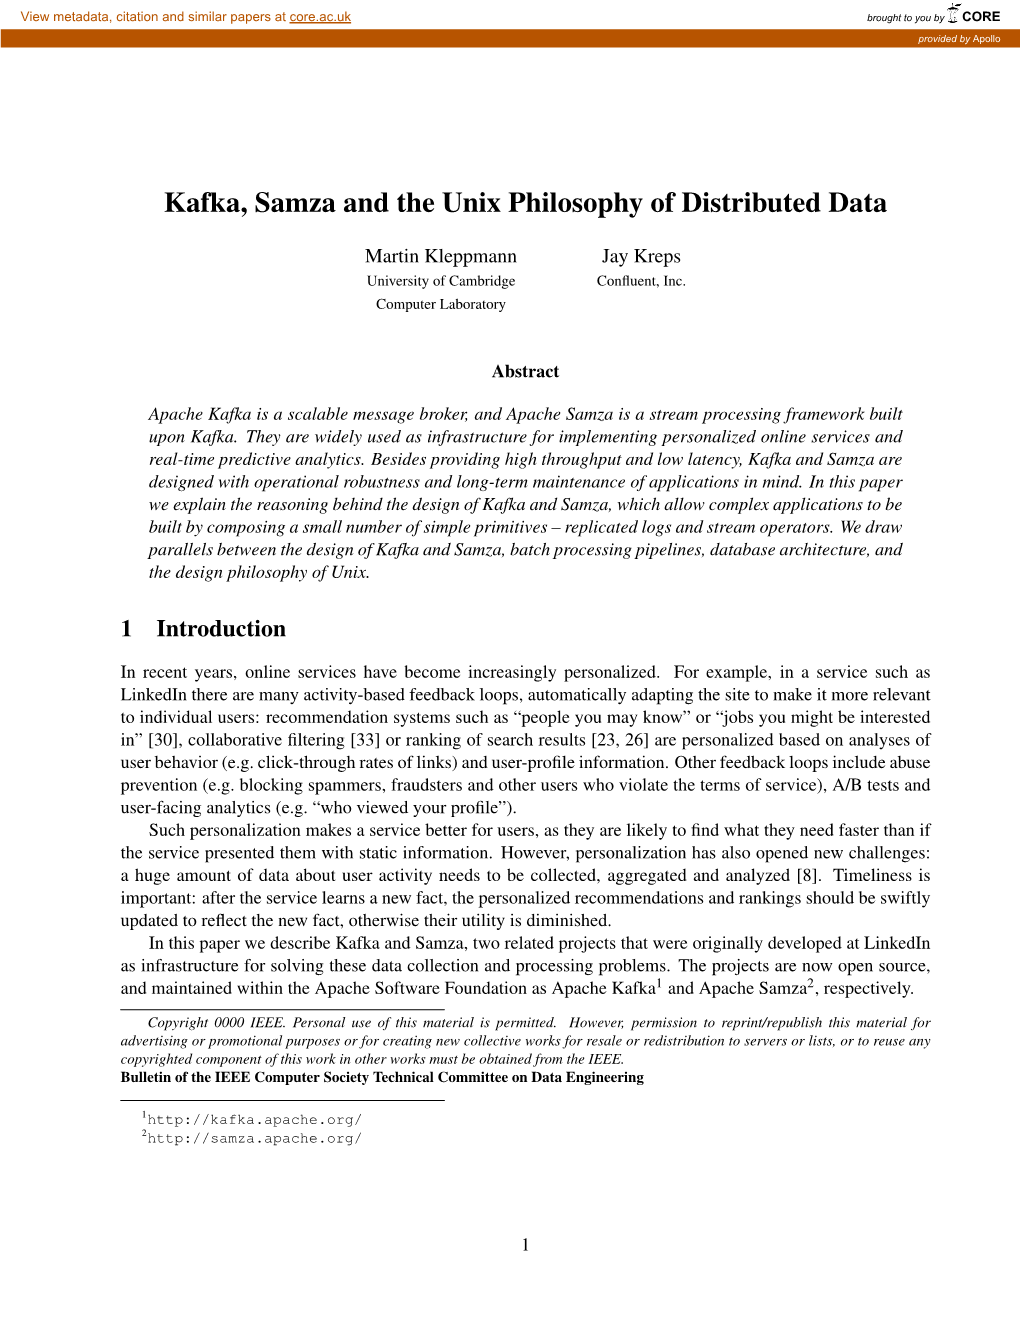 Kafka, Samza and the Unix Philosophy of Distributed Data